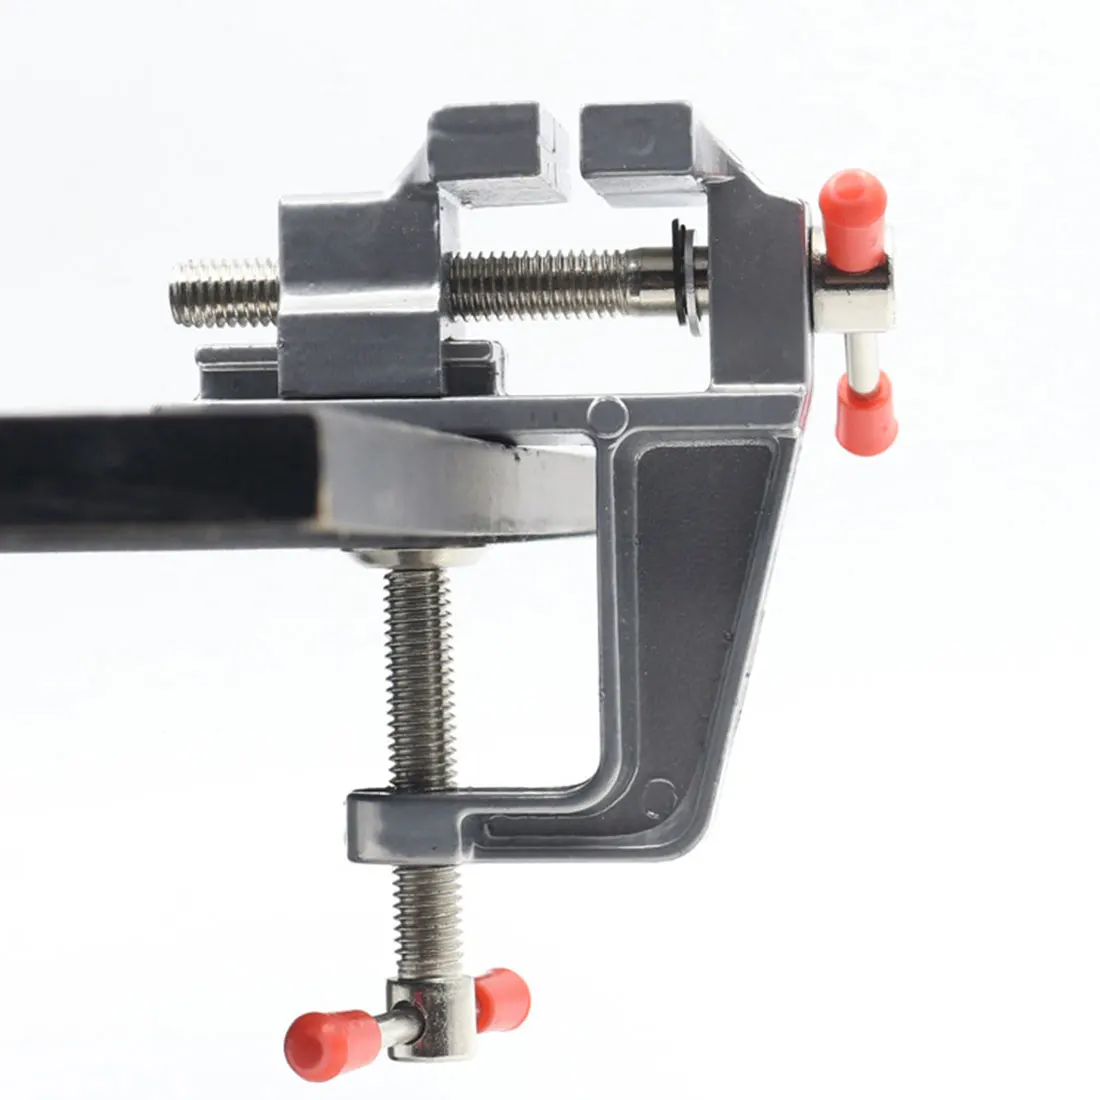 Мини-инструмент тиски 30 мм зажим открывающийся 1 штука Новинка 3,5 дюйма алюминиевый маленький зажим для хобби ювелира на стол скамейка тиски